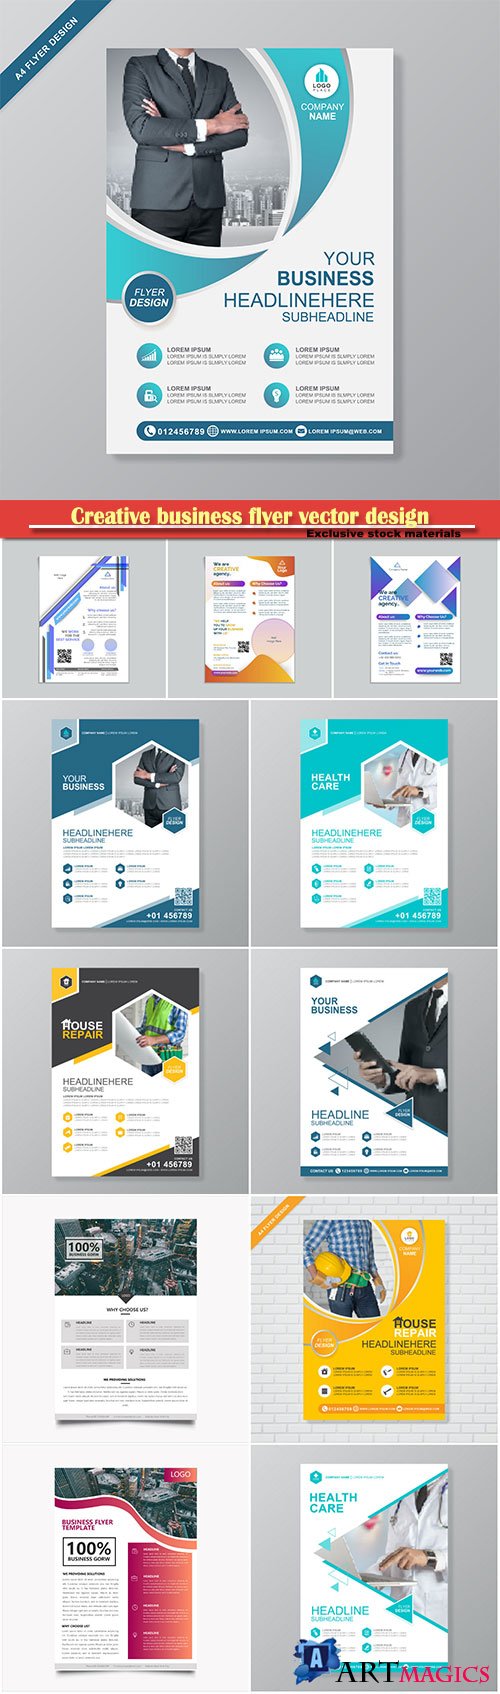 Creative business flyer vector design, corporate template layout presentation